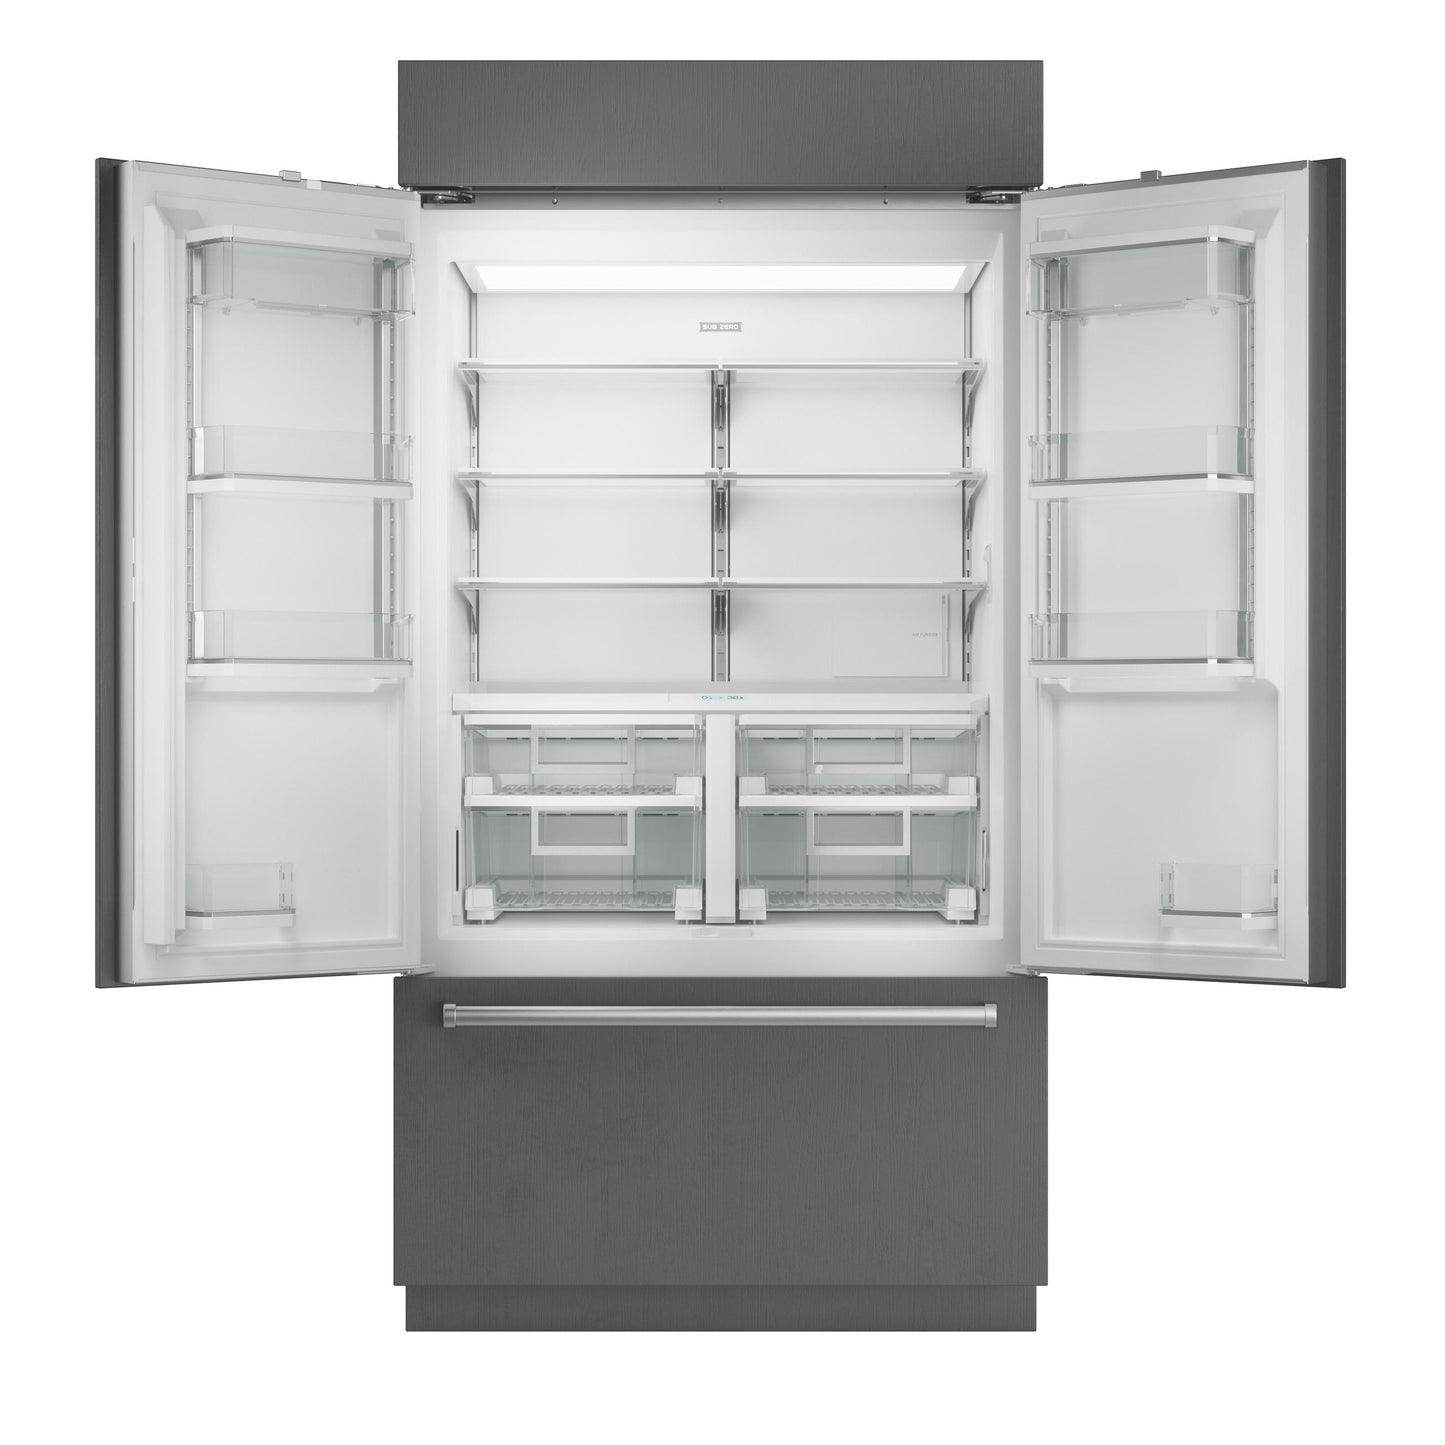 Sub-Zero CL4250UFDIDSP 42" Classic French Door Refrigerator/Freezer With Internal Dispenser